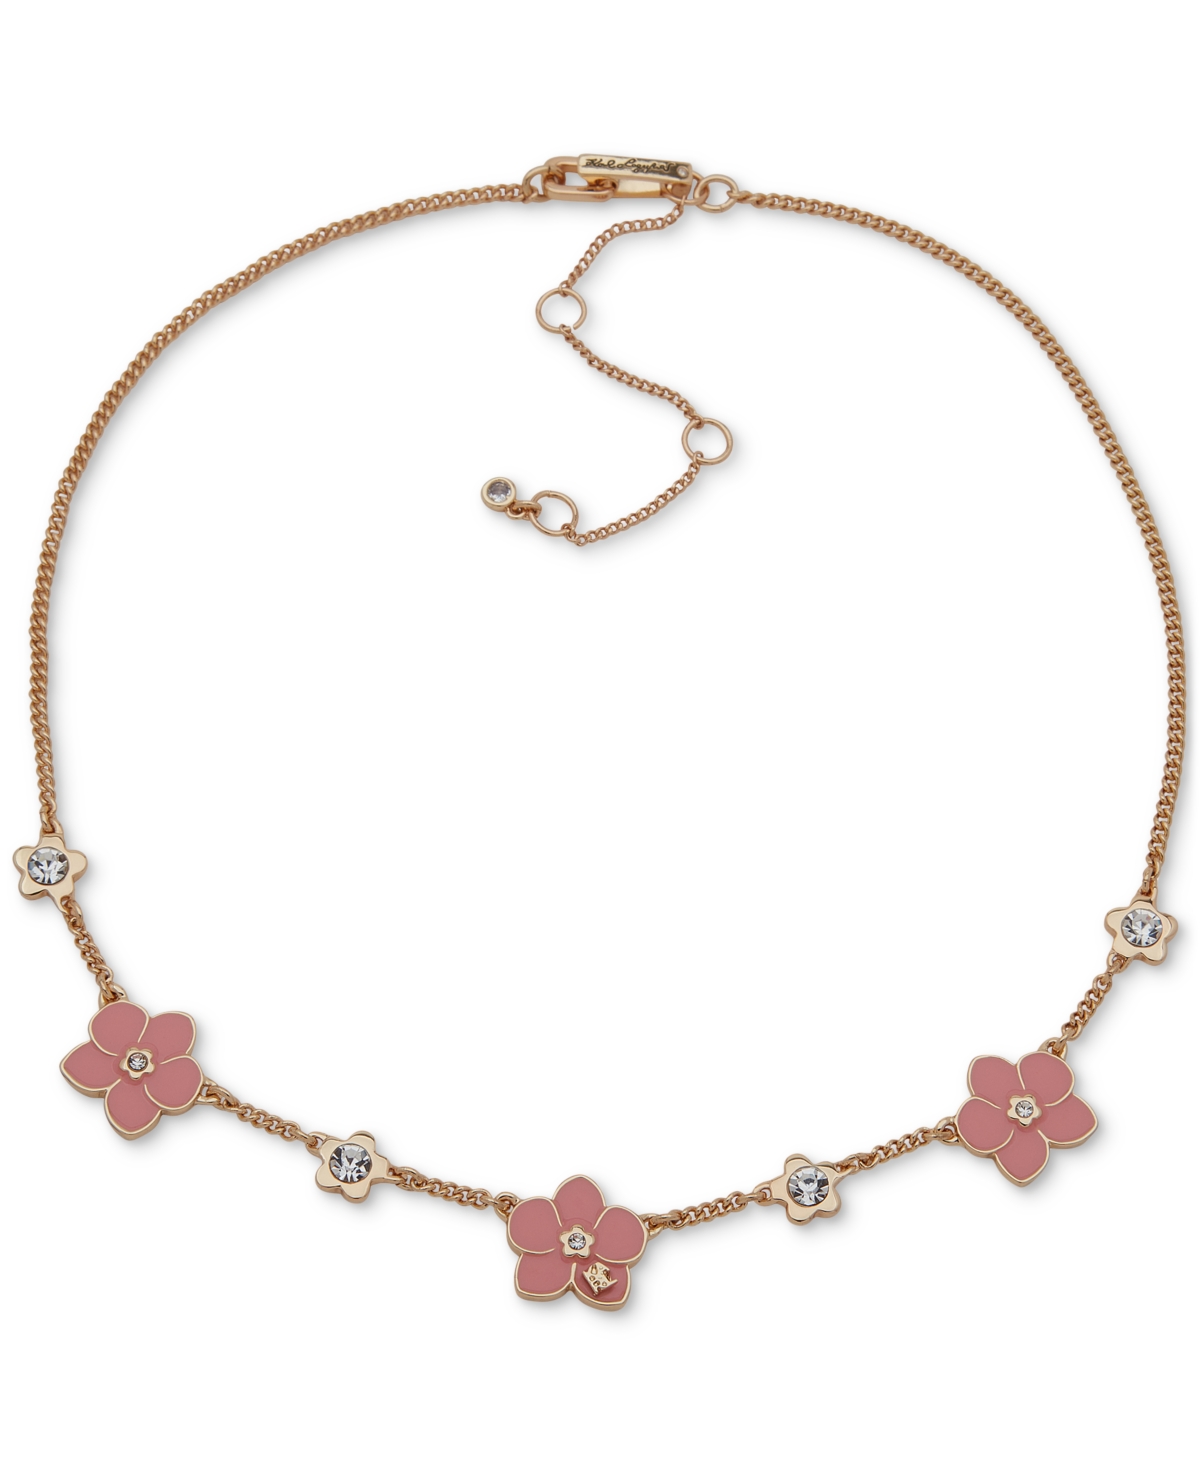 Gold-Tone Crystal & Pink Flower Statement Necklace, 16" + 3" extender - Pink